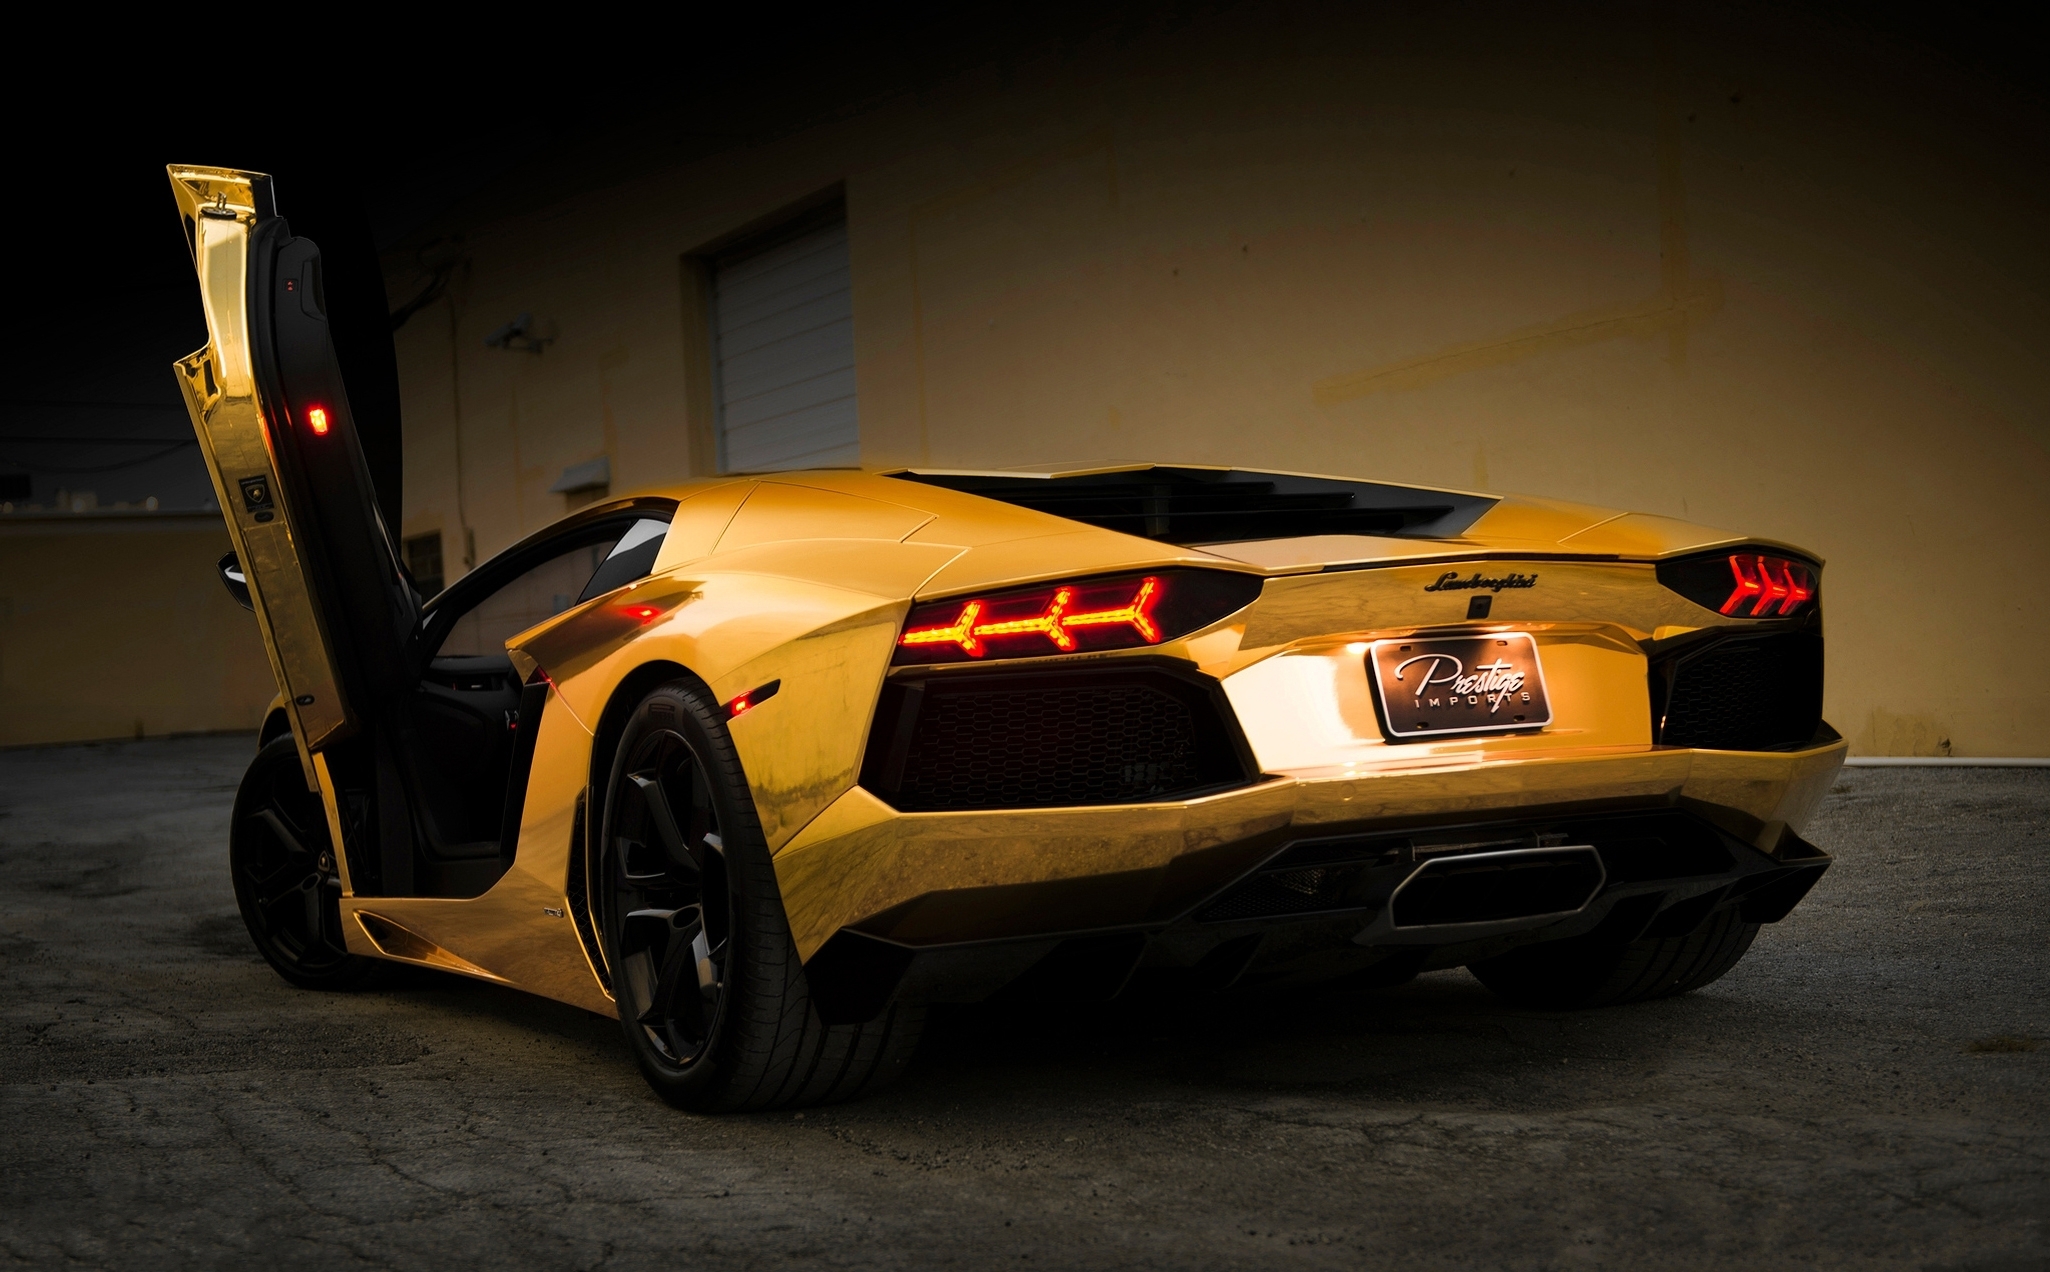 Popular Car Wallpaper Lamborghini By Image O8os With